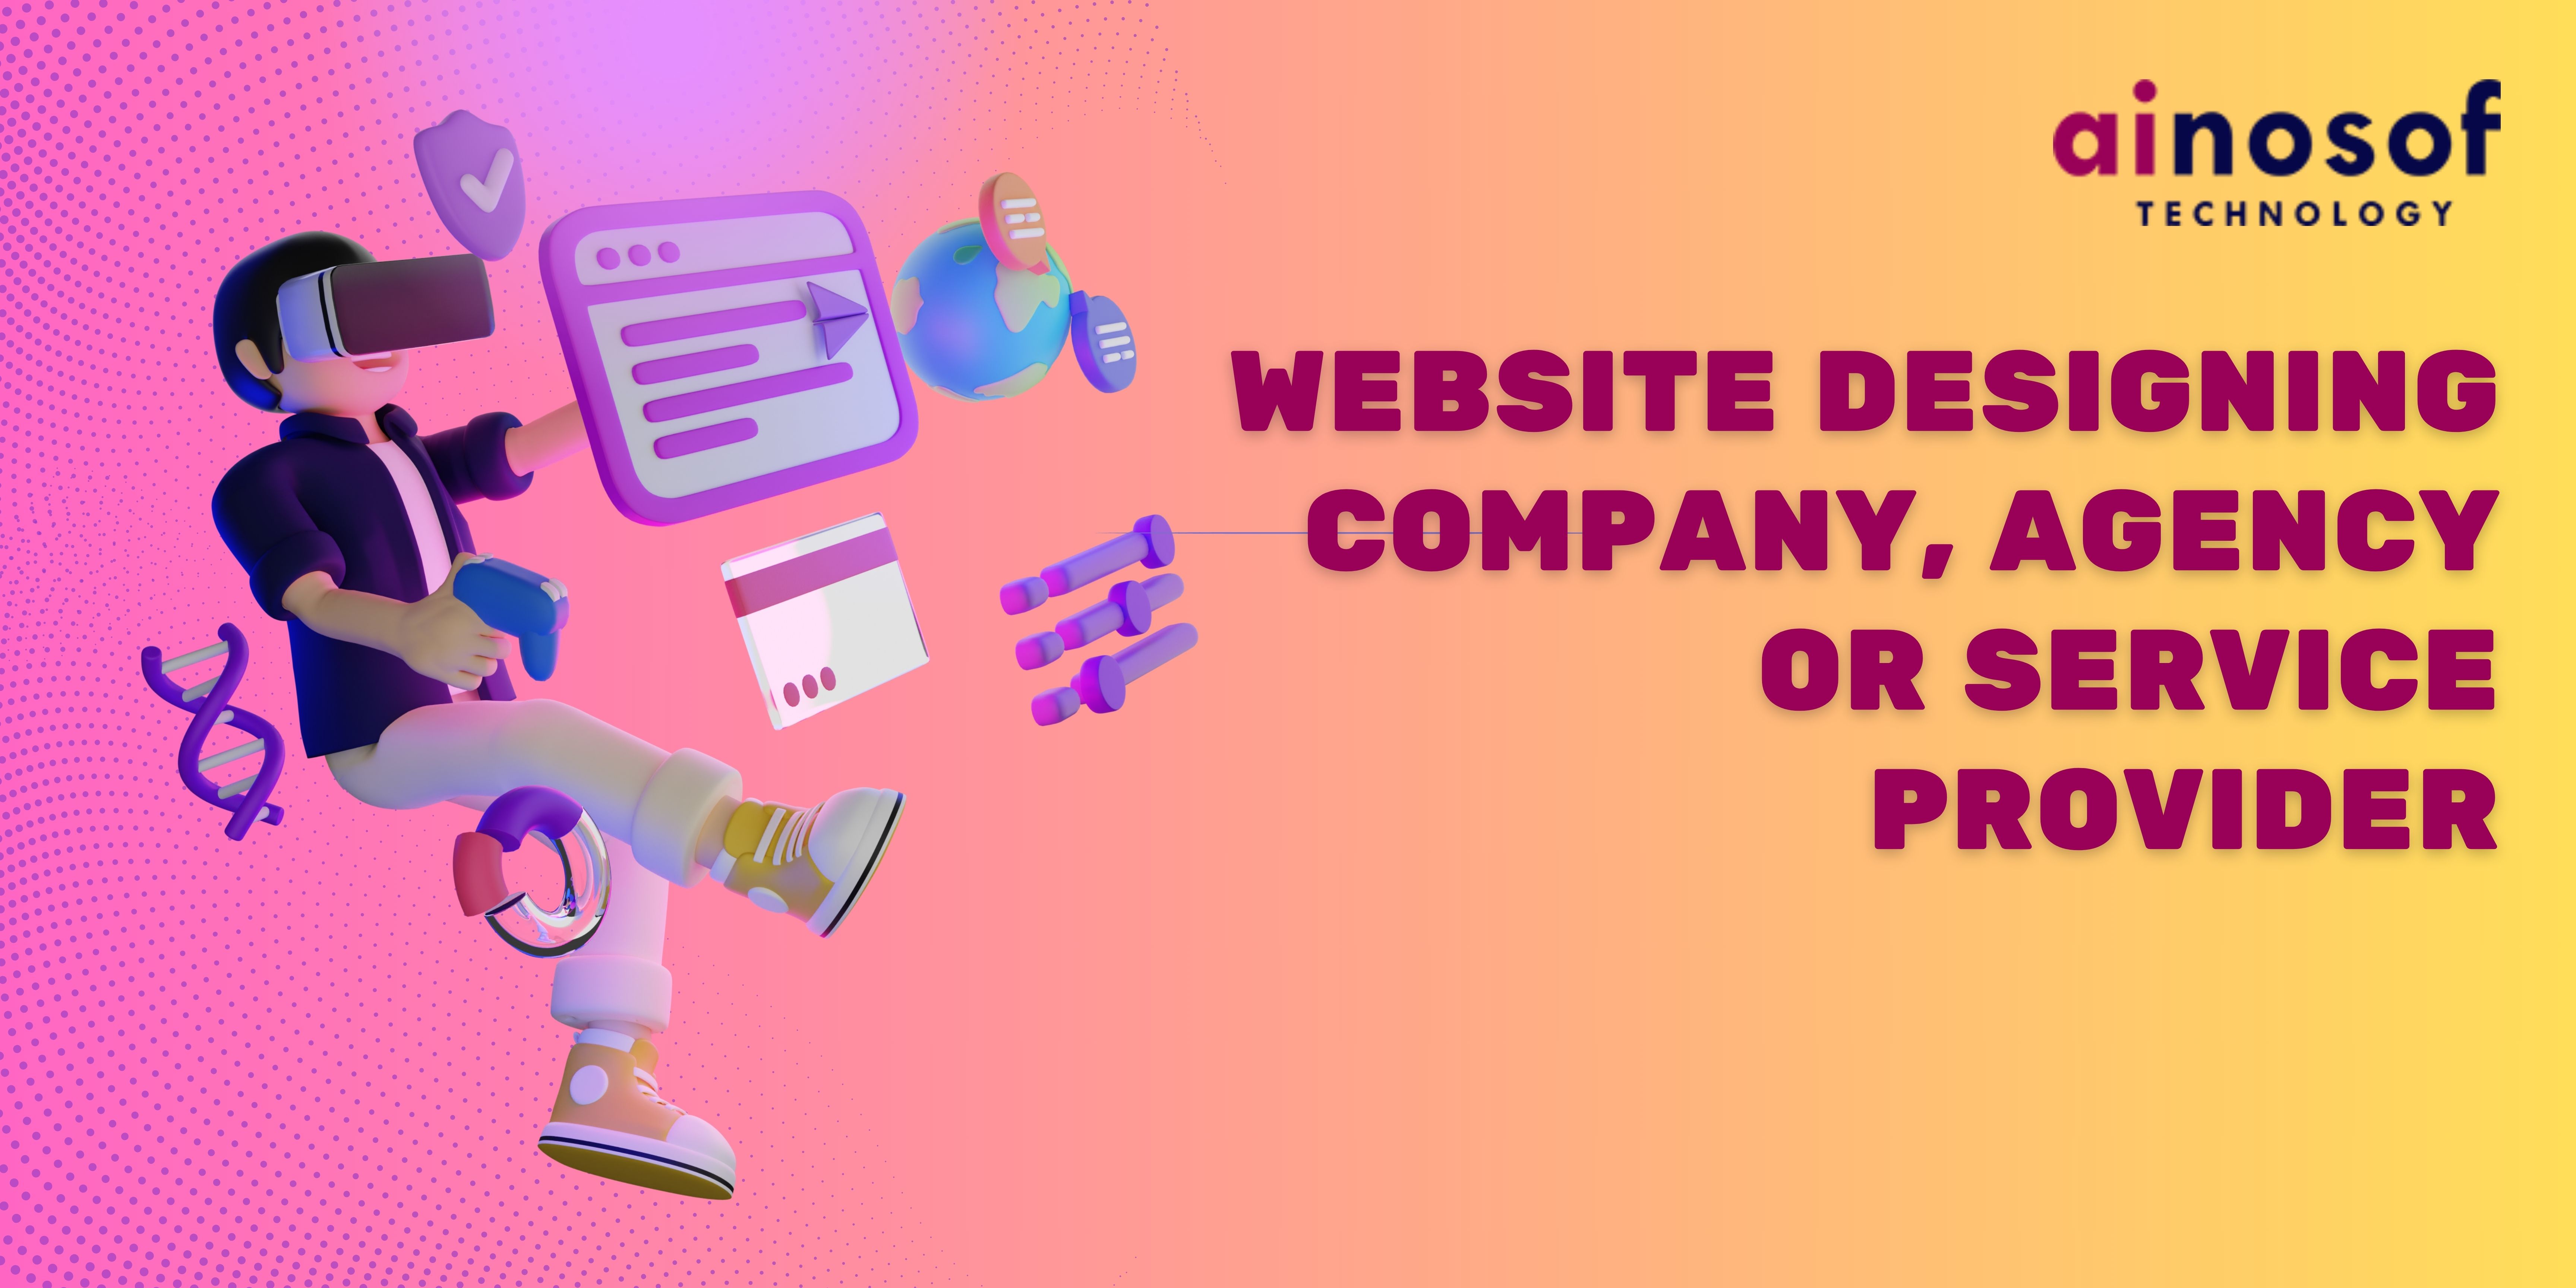 Website Design Company, Agency, or Service Provider